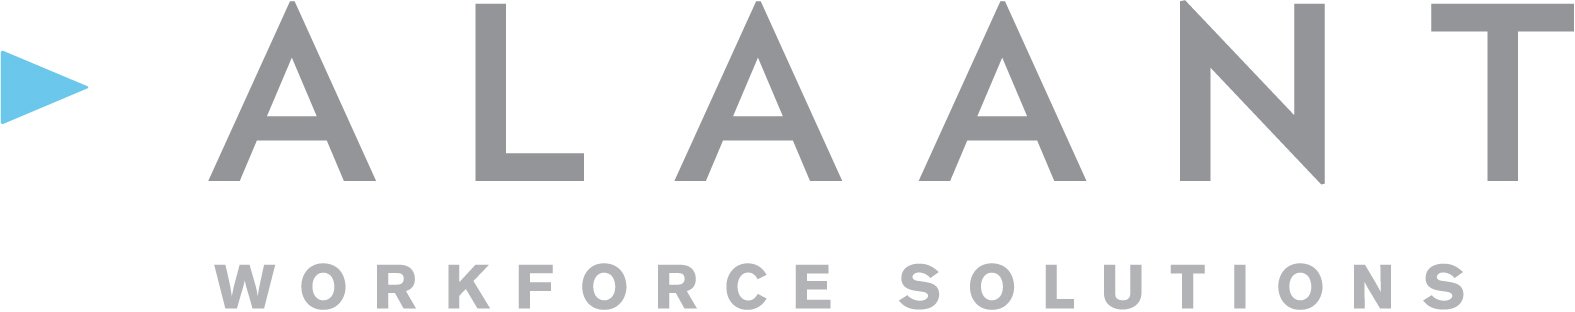 Alaant-Workforce-Solutions-logo